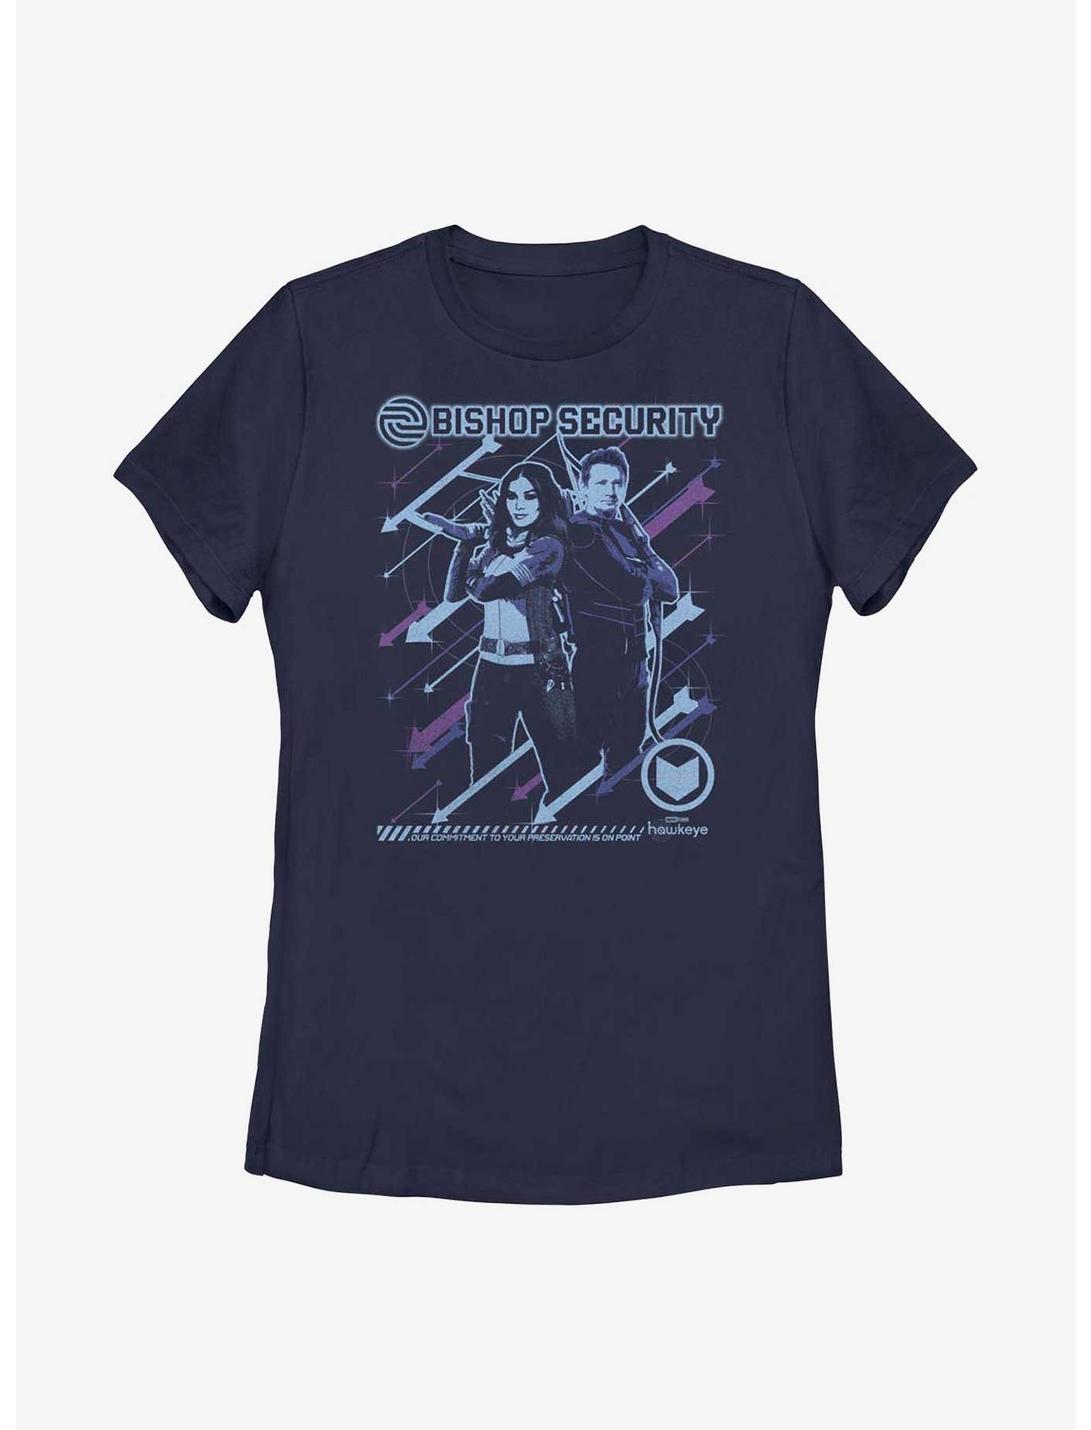 Marvel Hawkeye Bishop Security Womens T-Shirt, NAVY, hi-res